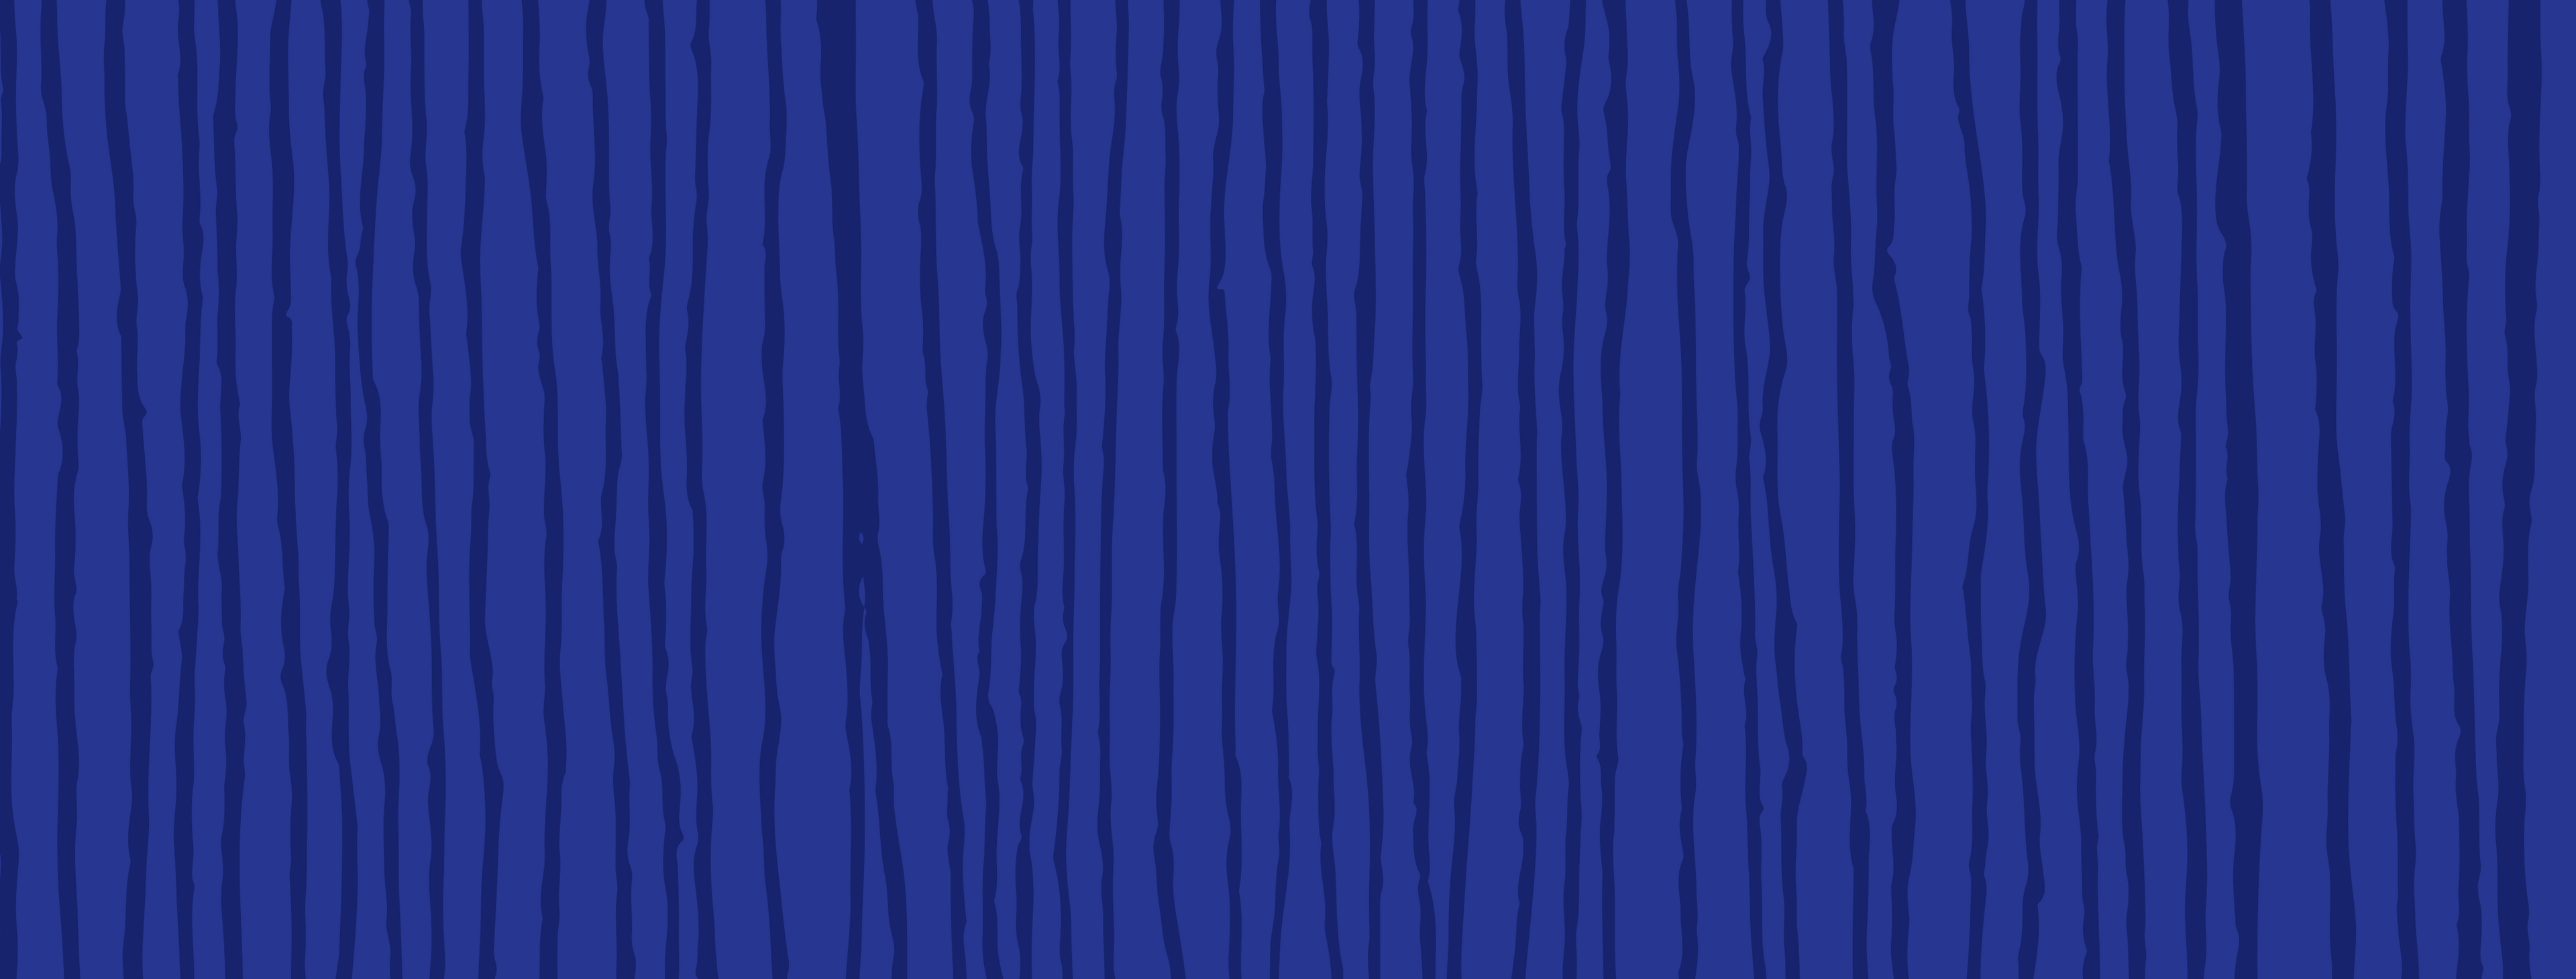 stripes on blue background